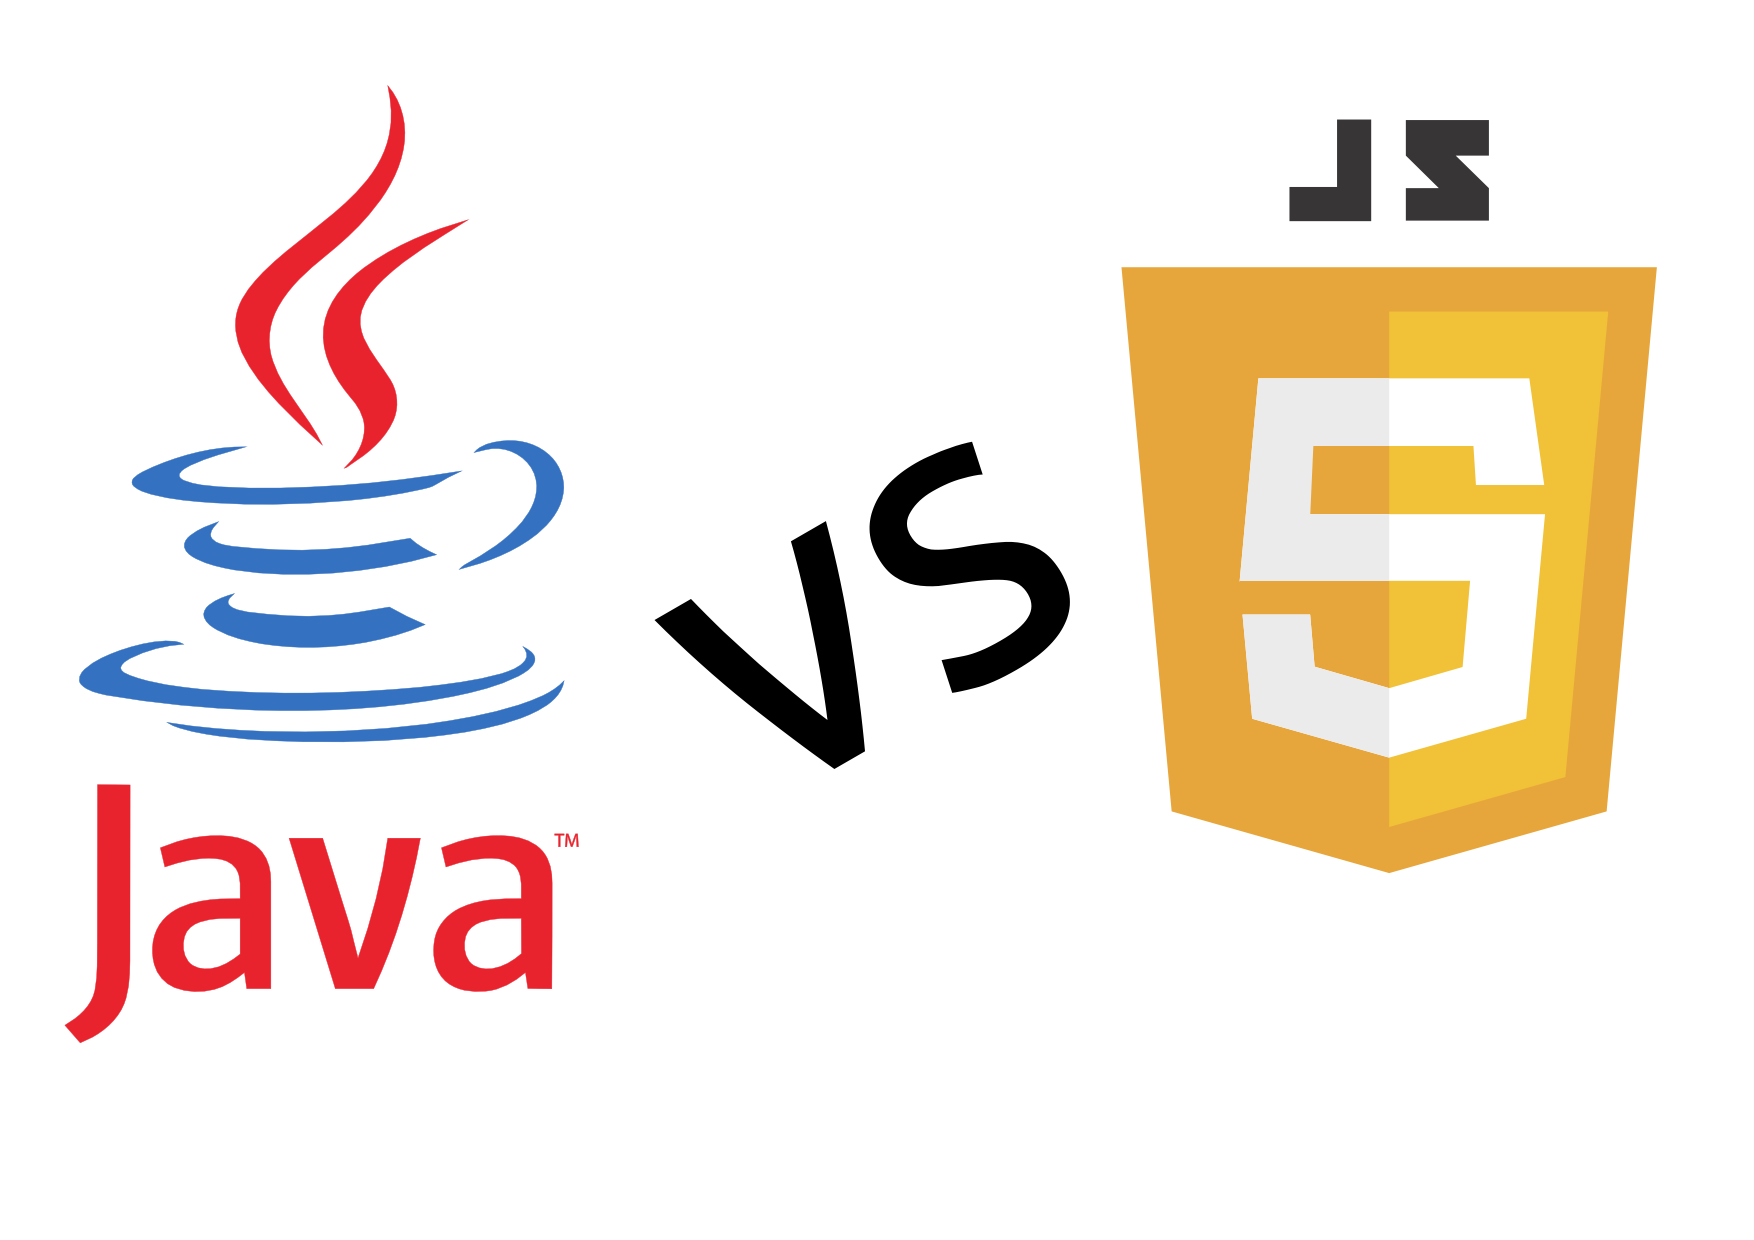 Java rendering. Значок джава скрипт. Java и java скрипт. Джава скрипт язык программирования. JAVASCRIPT (джава-скрипт).